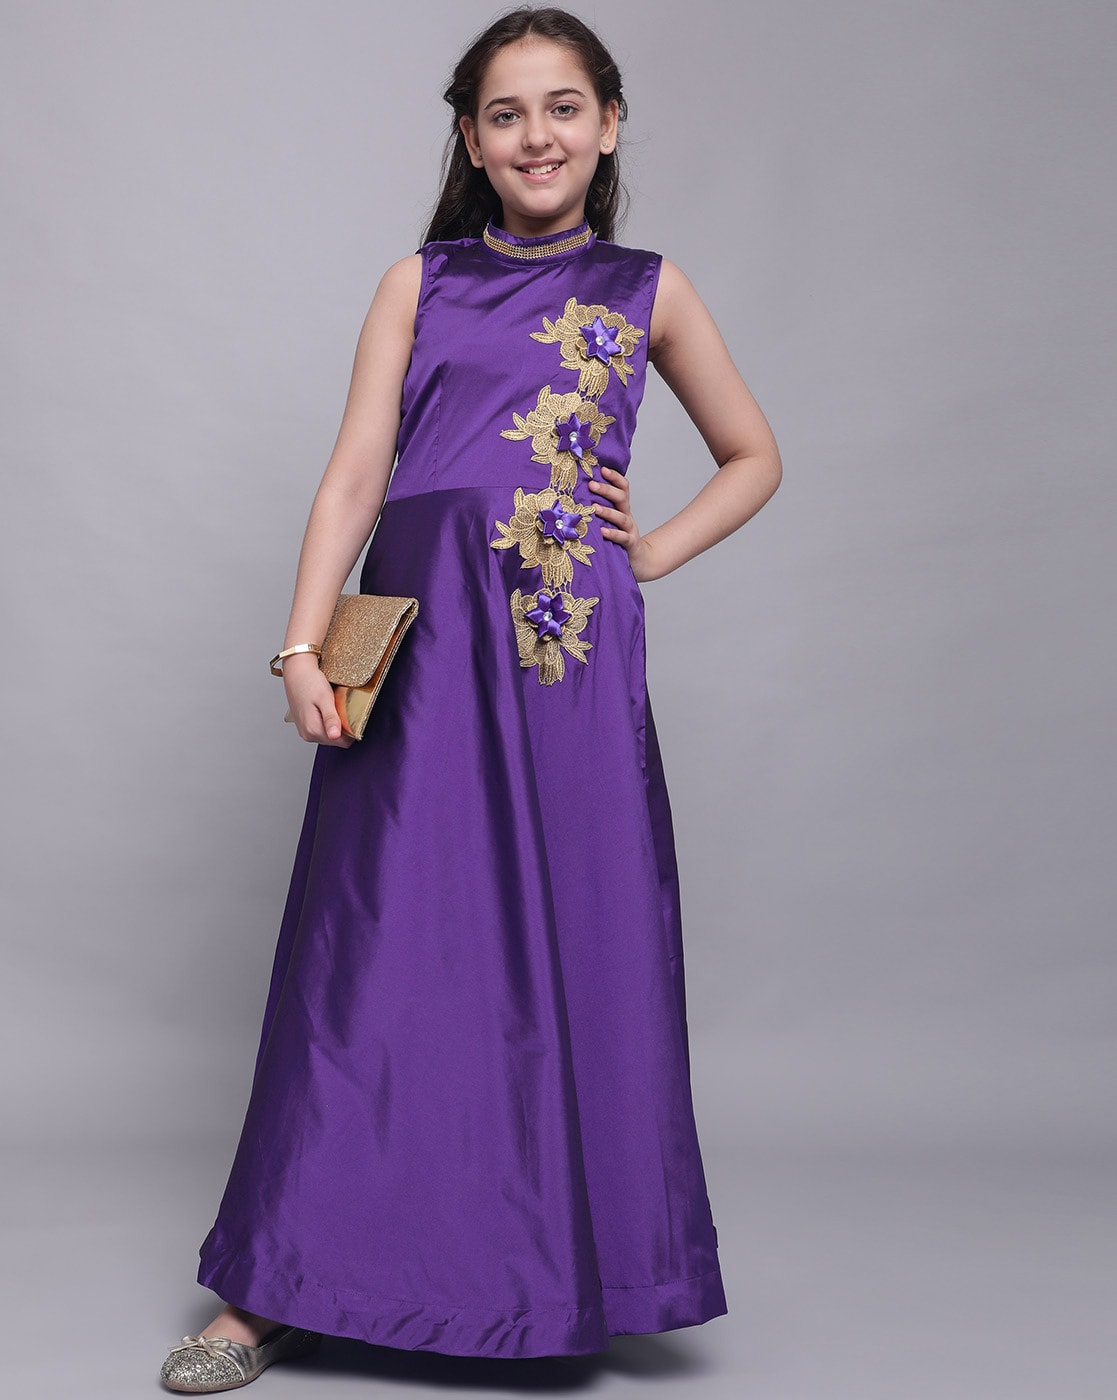 Royal Purple Dress | Purple and Gold Dress at Sara Dresses